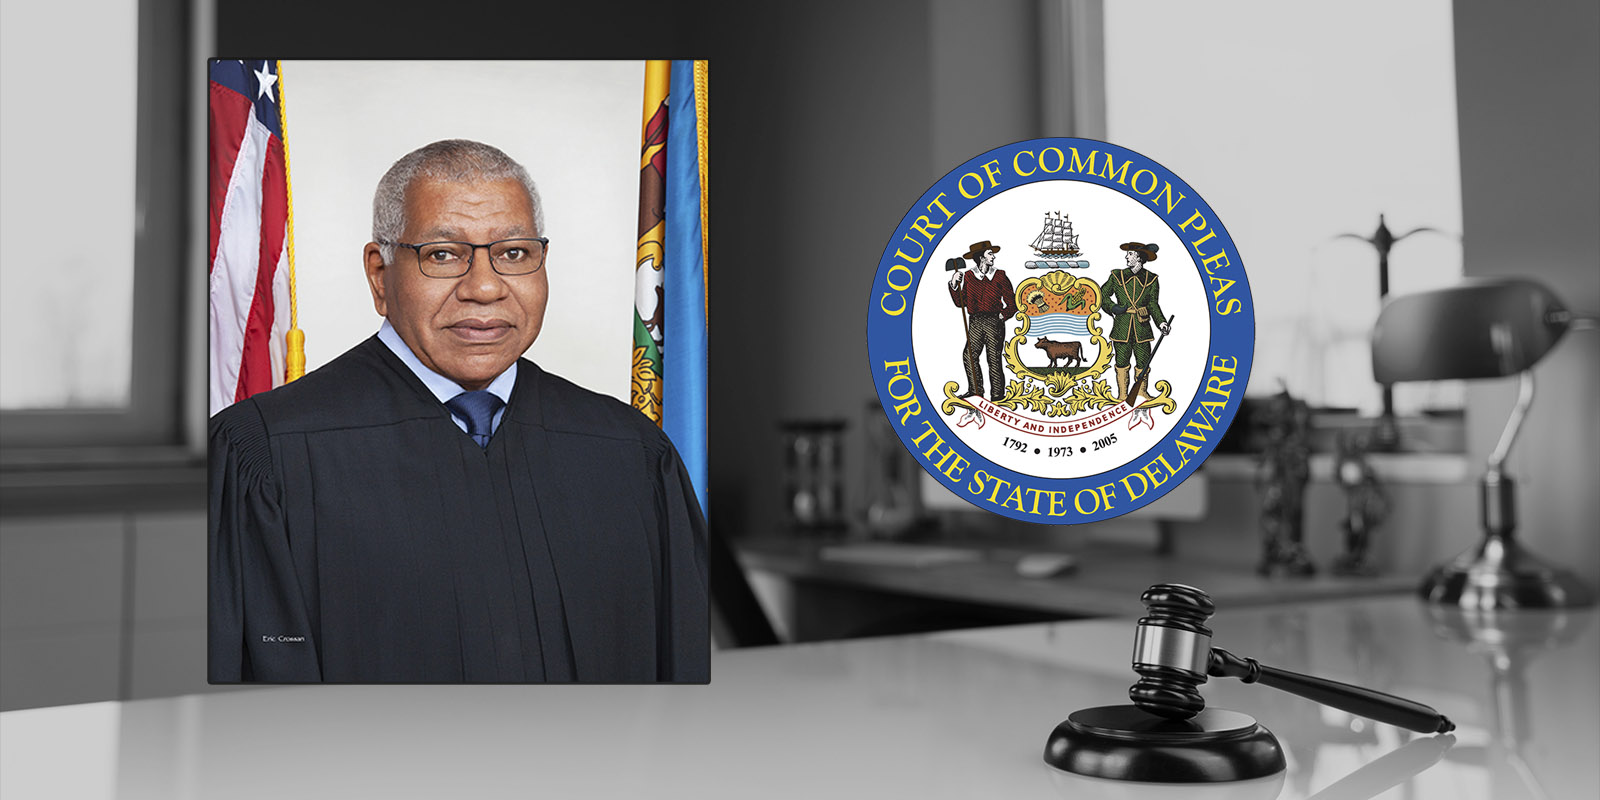 Court of Common Pleas Chief Judge Alex J. Smalls to Retire in May